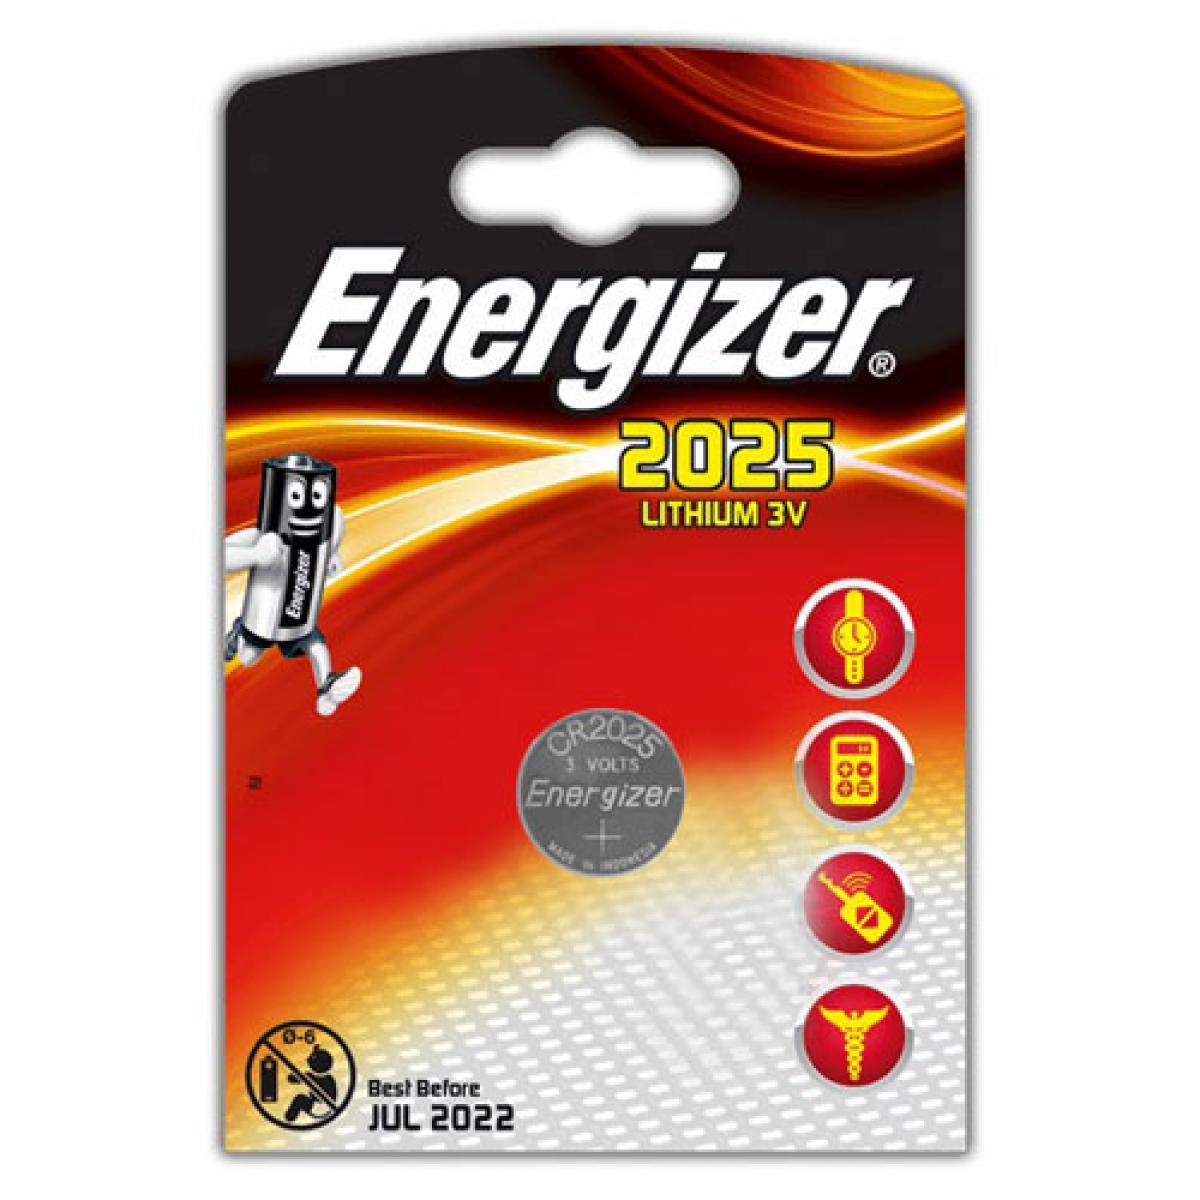 Energizer - Energizer CR2025 Lithium 3V - Piles standard